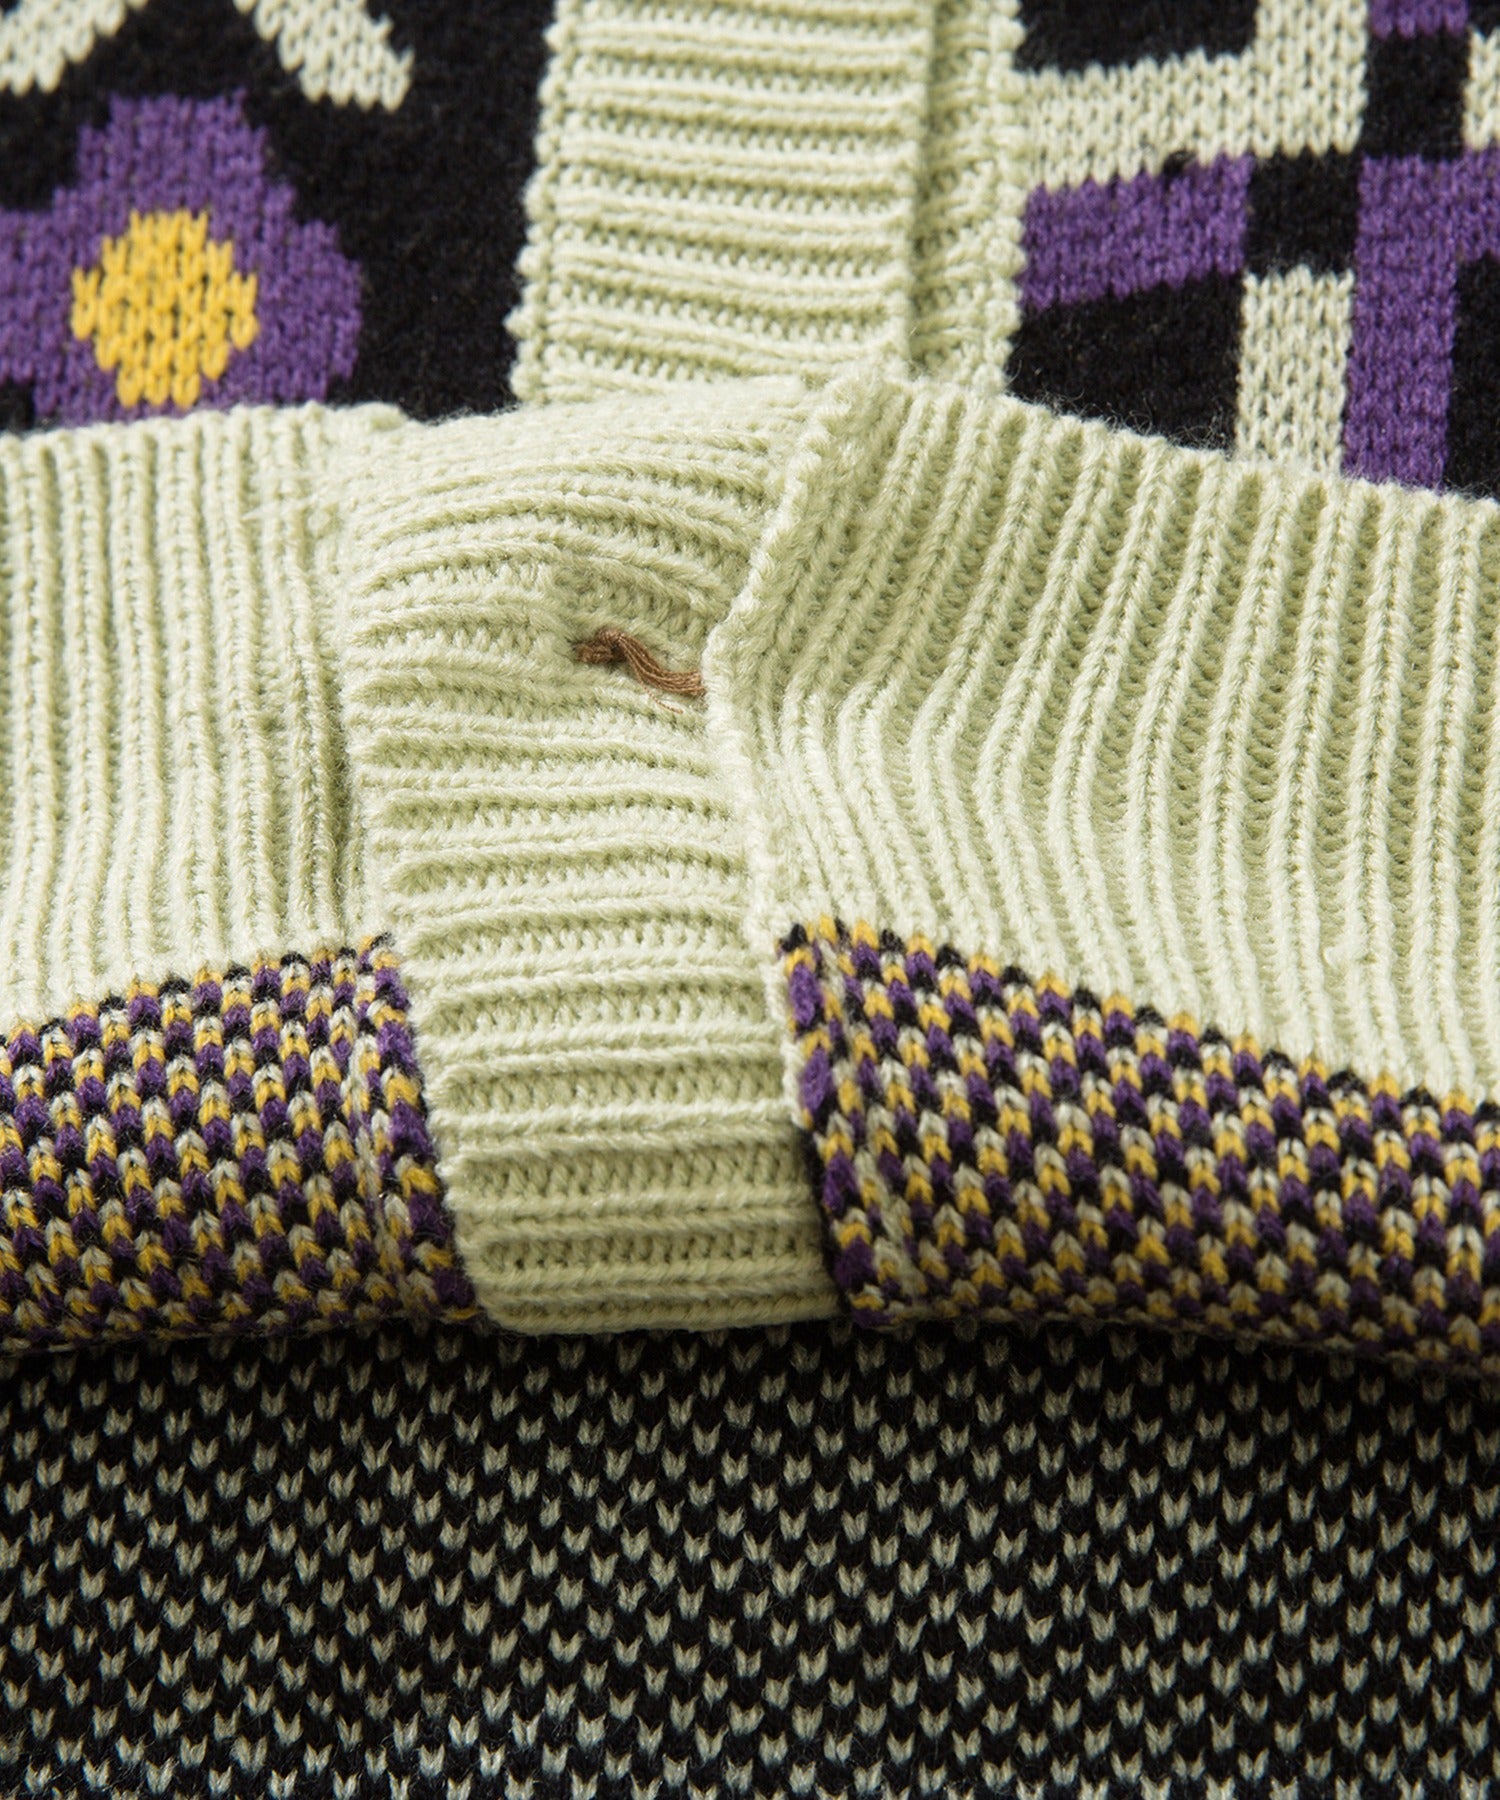 [HOOK -original-] Retro flower/check pattern asymmetric open-front knit vest